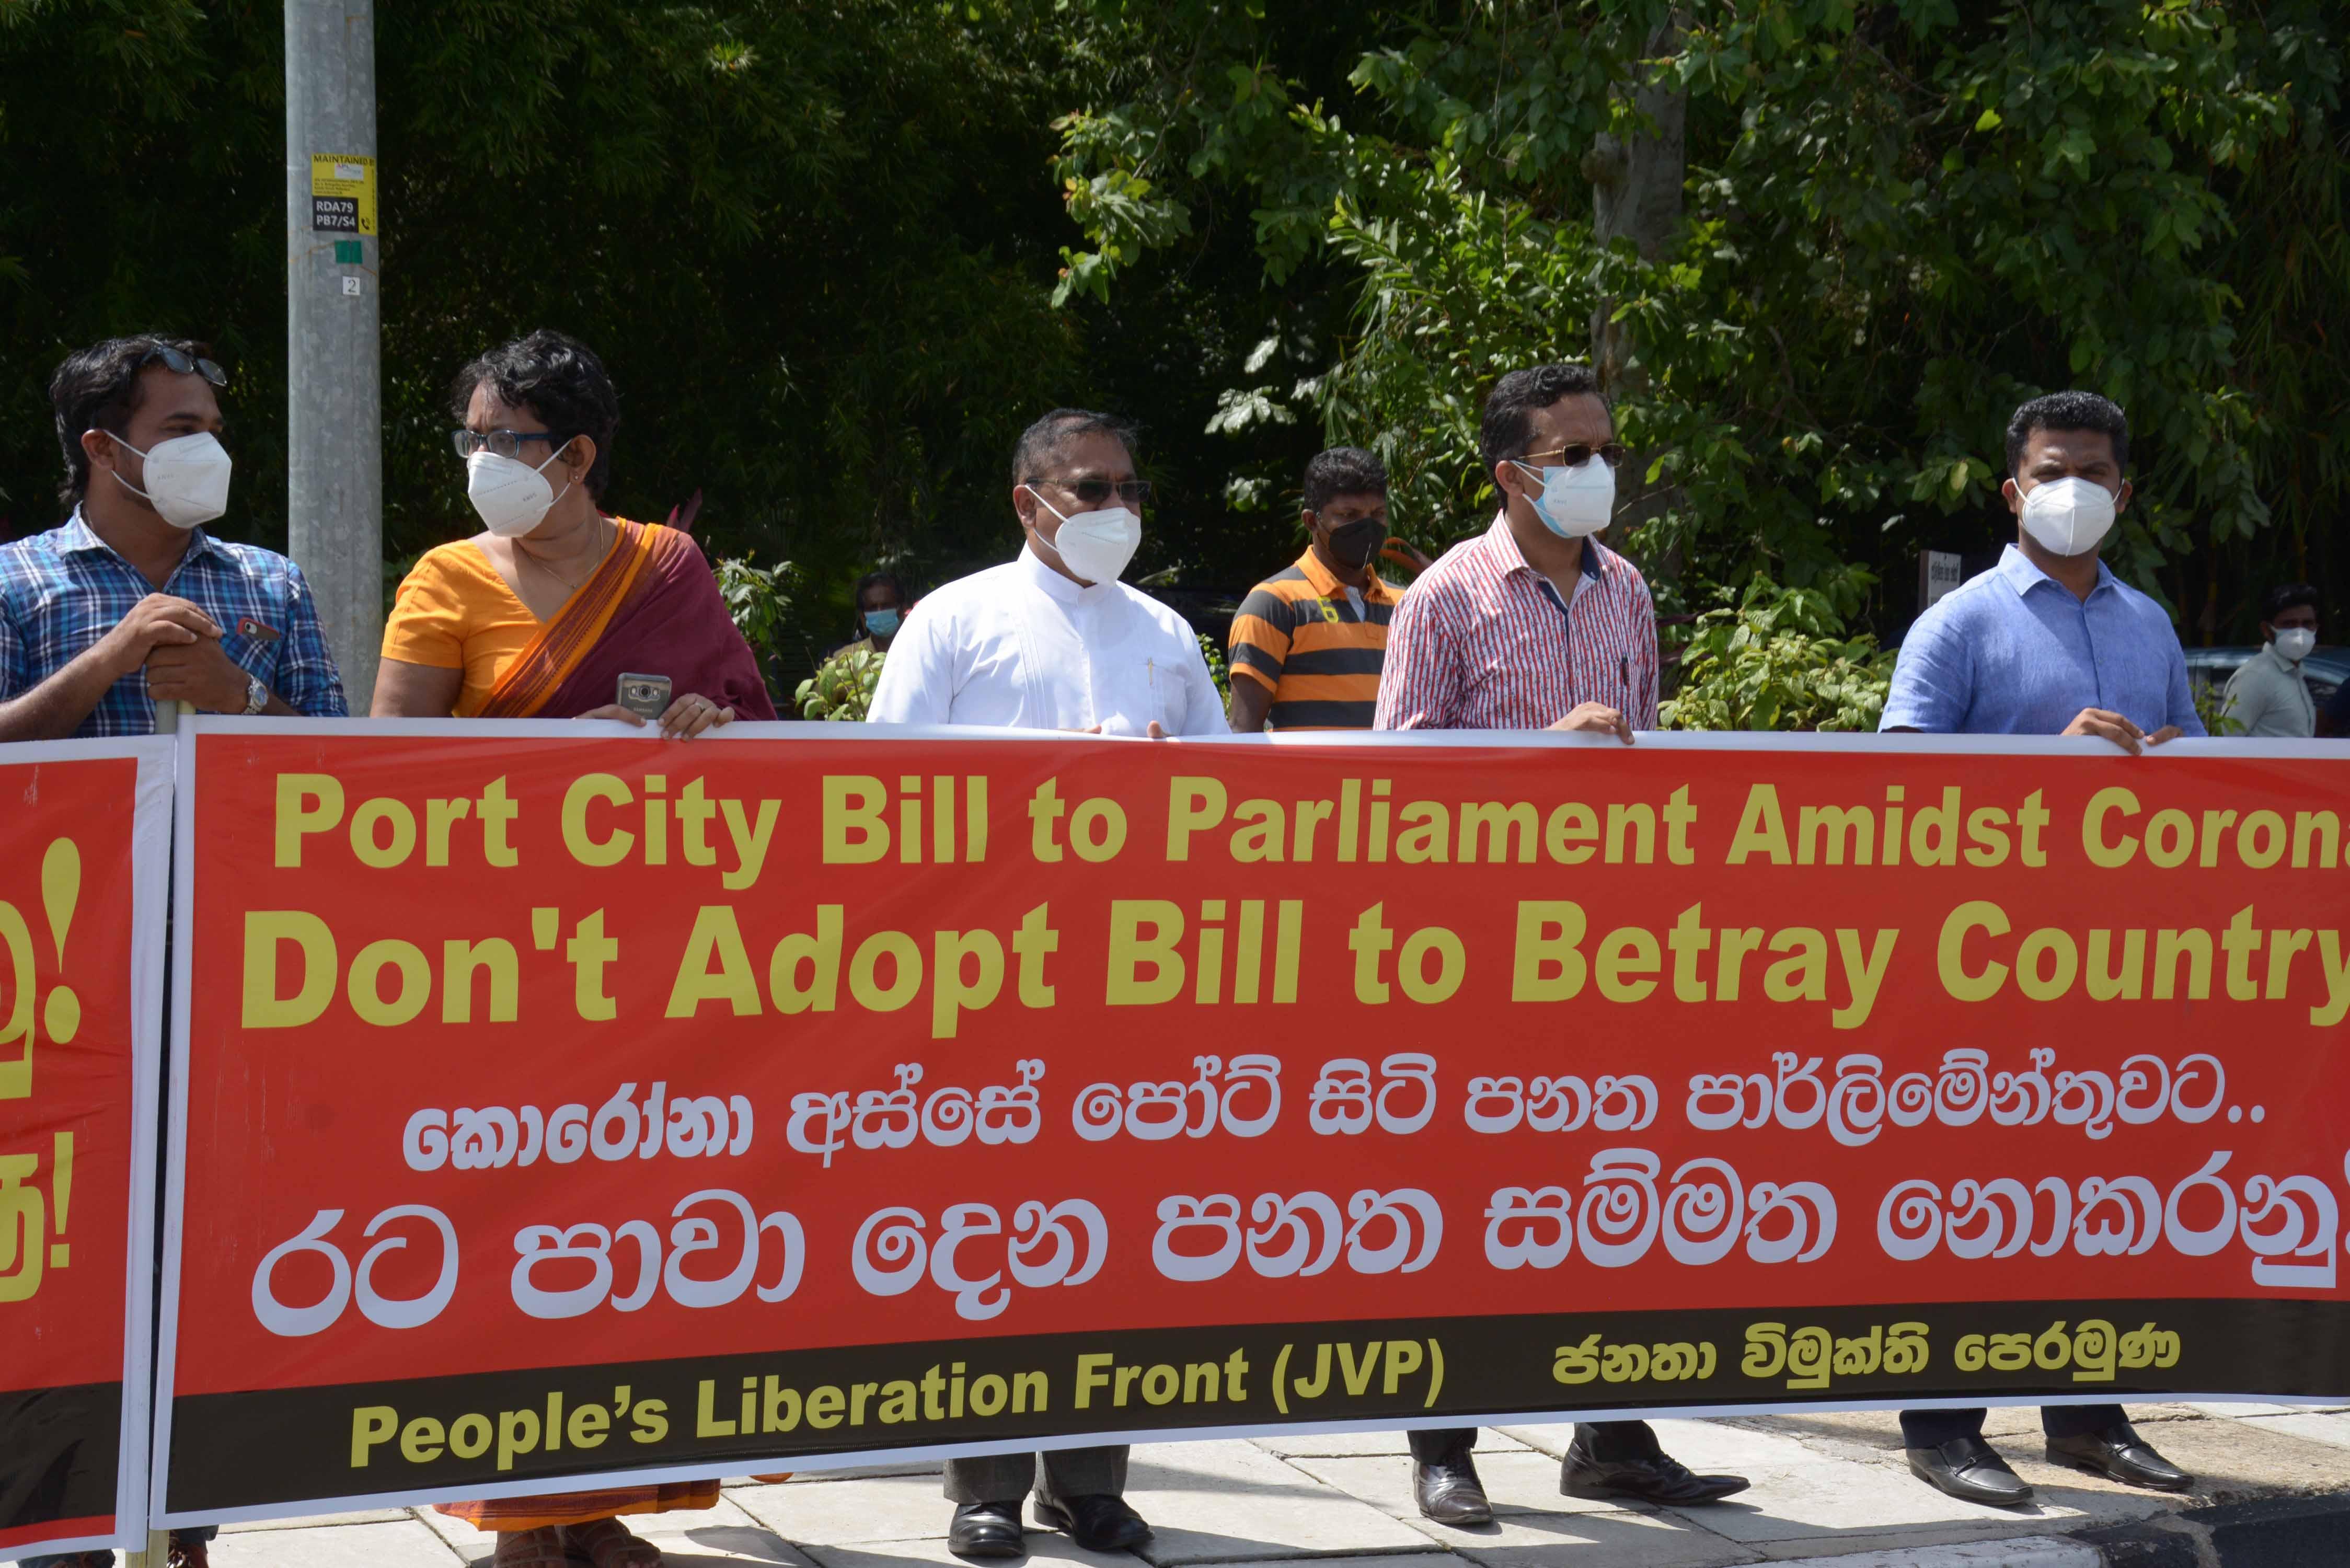 JVP protest against Port City Bill - Read Photos